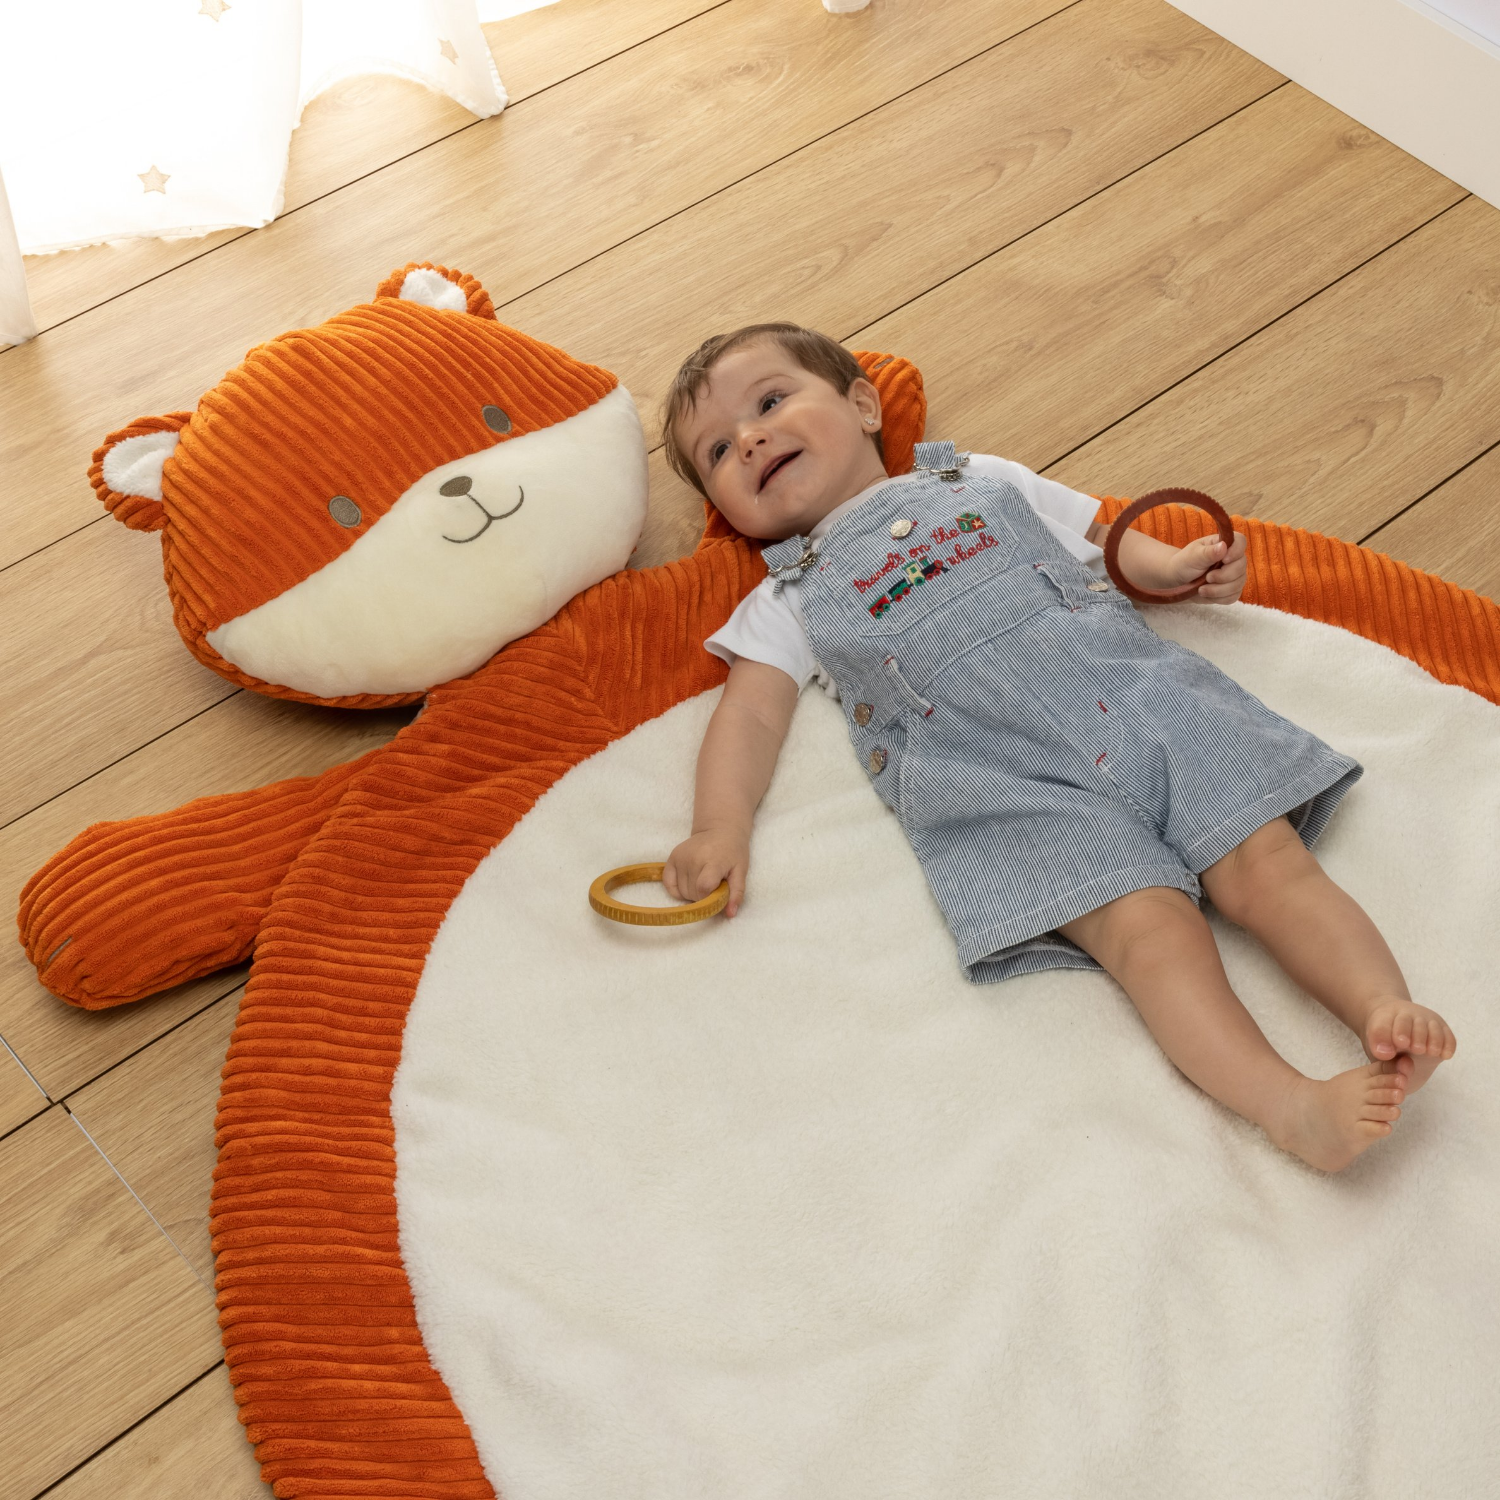 RUGUIES- Padded Baby Rug- Baby Play Blanket- Floor Cushion for Babies